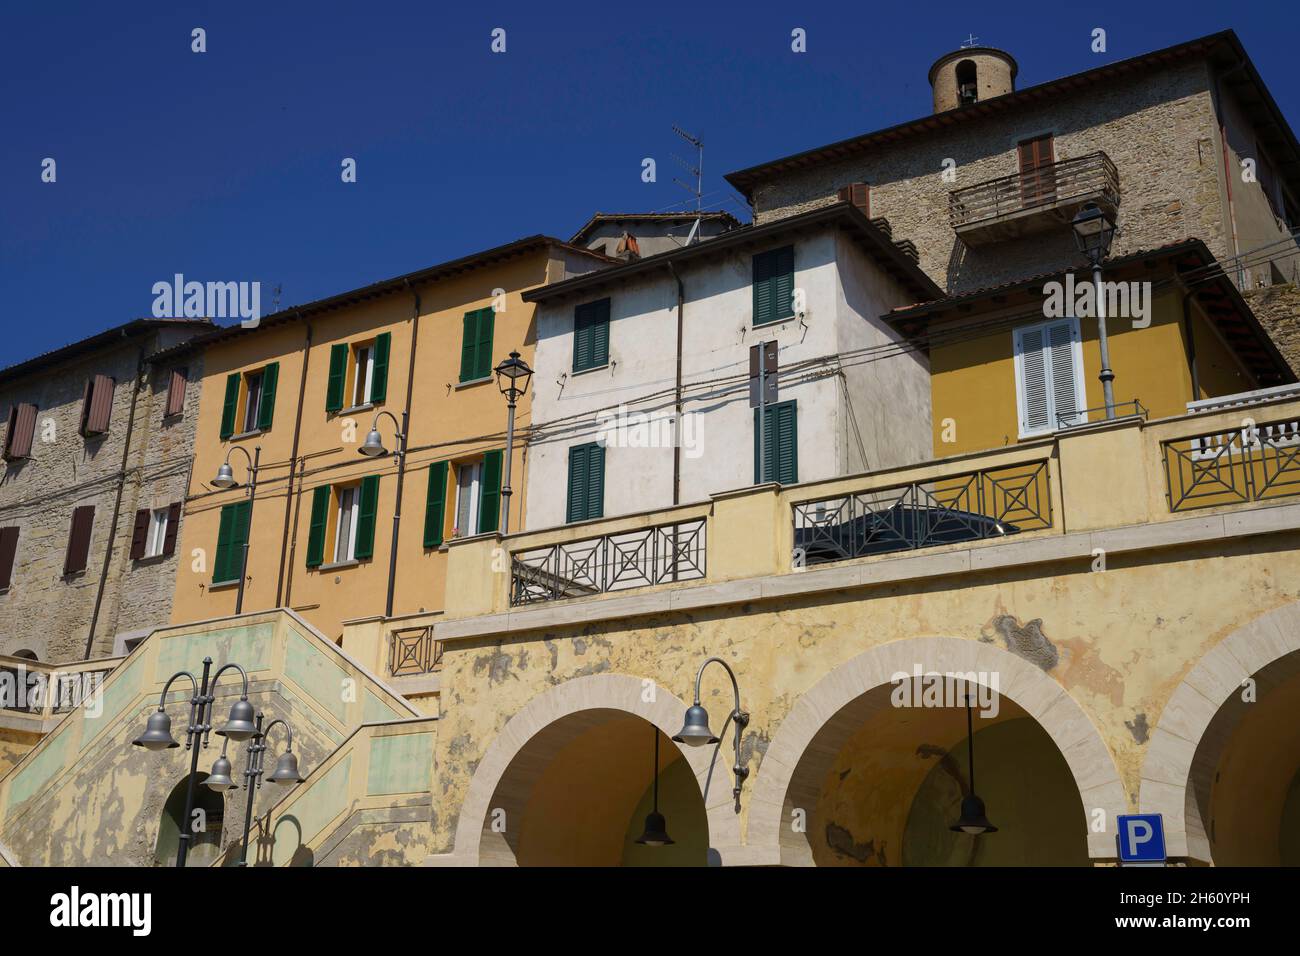 Castrocaro Terme, provincia de Forli, Emilia-Romagna, Italia: Ciudad histórica Foto de stock